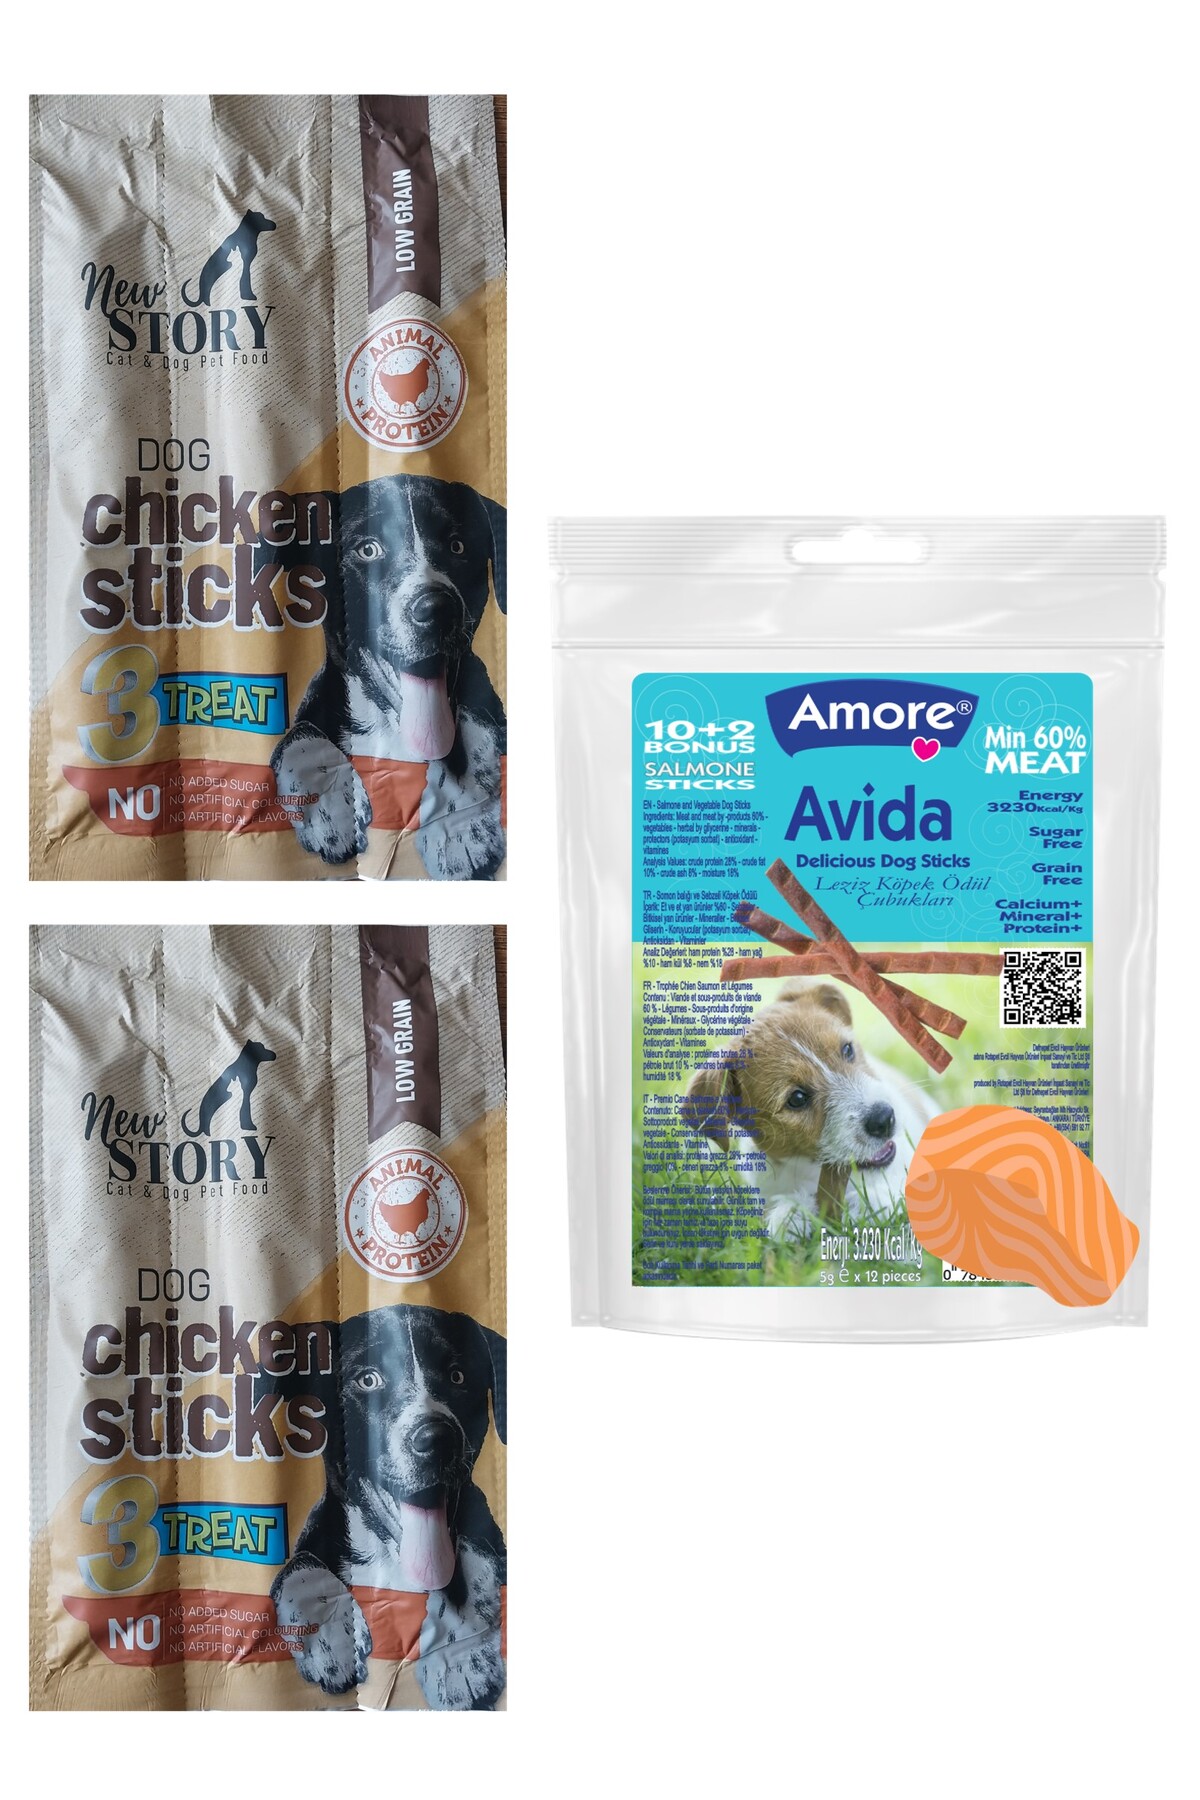 Amore Avida Salmone 12li Somonlu Kopek Odul Sticks, New Story Chicken Sticks Extra 2 adet 3lu 11gr